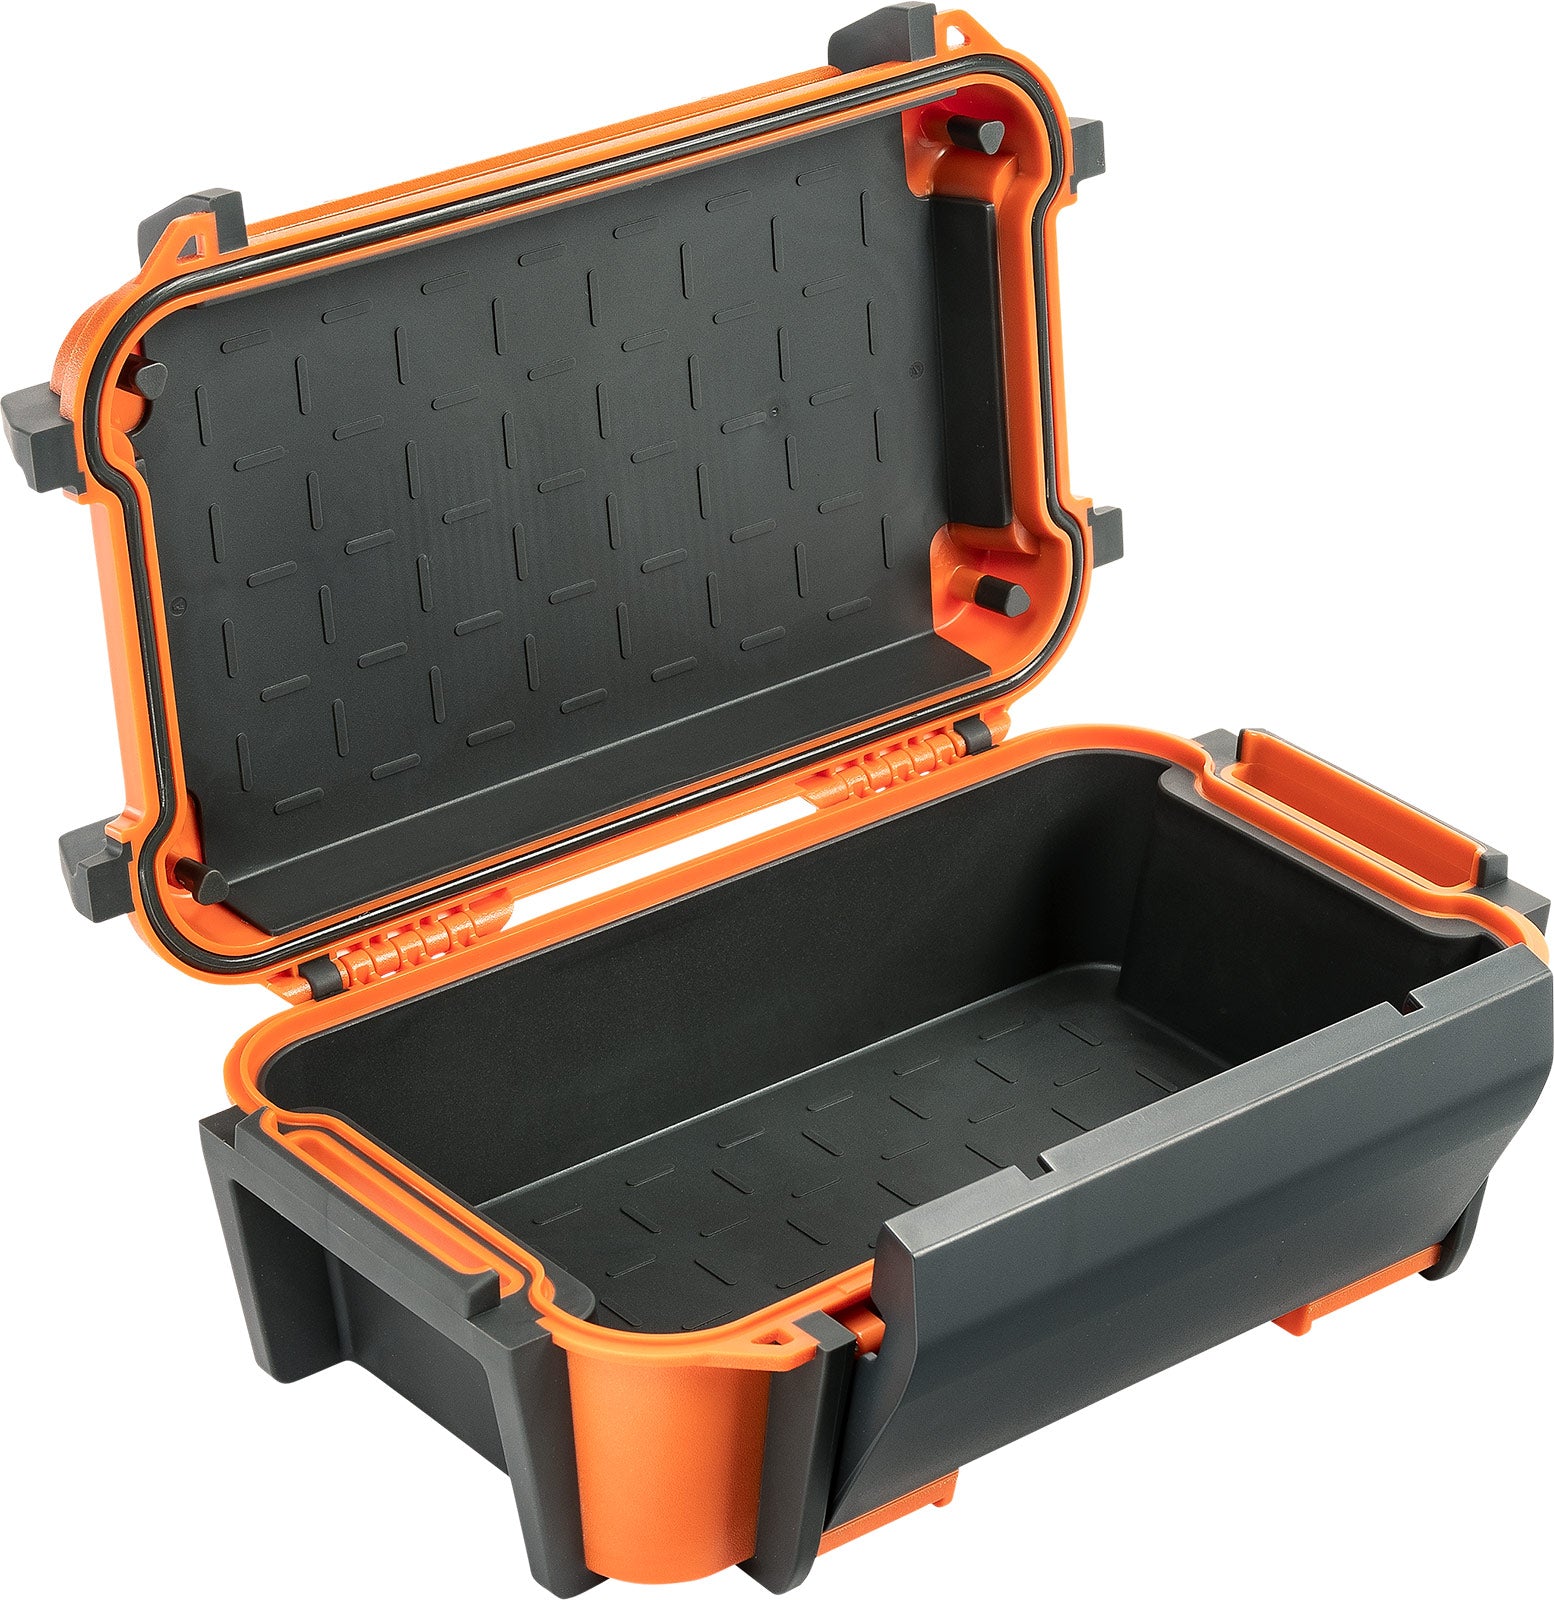 Pelican - R60 Personal Utility Ruck Case (Orange)